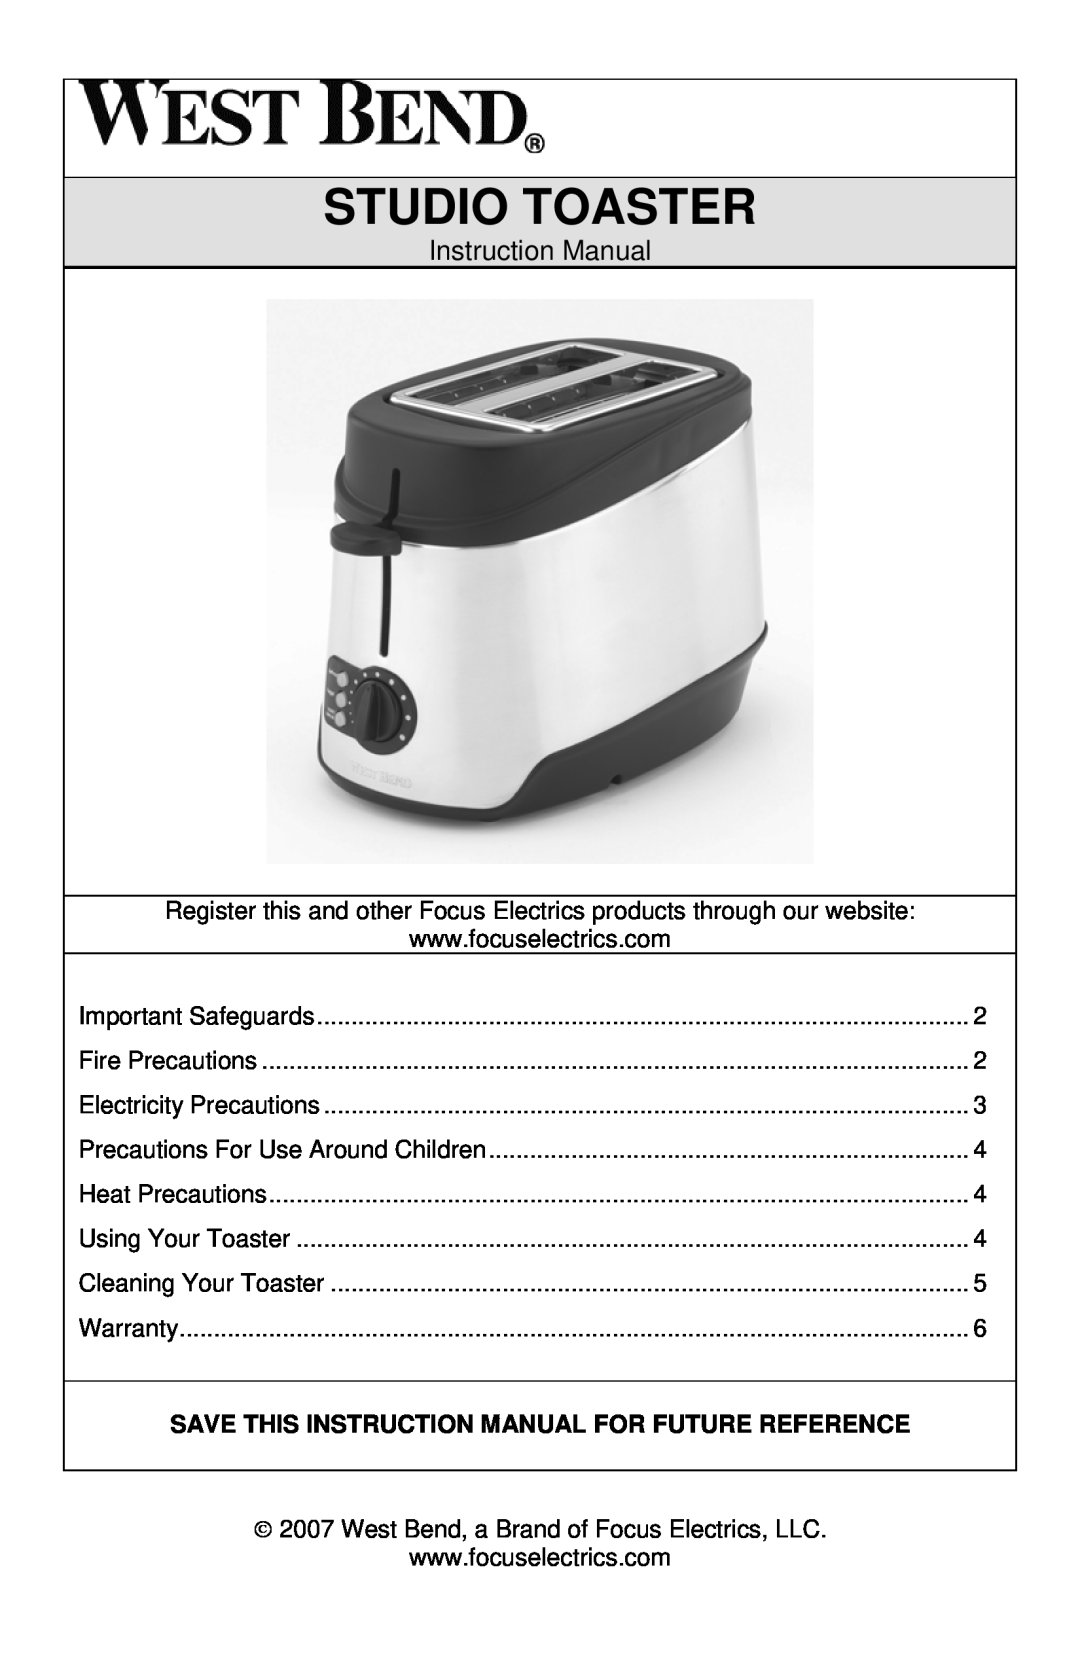 West Bend Studio Toaster instruction manual 